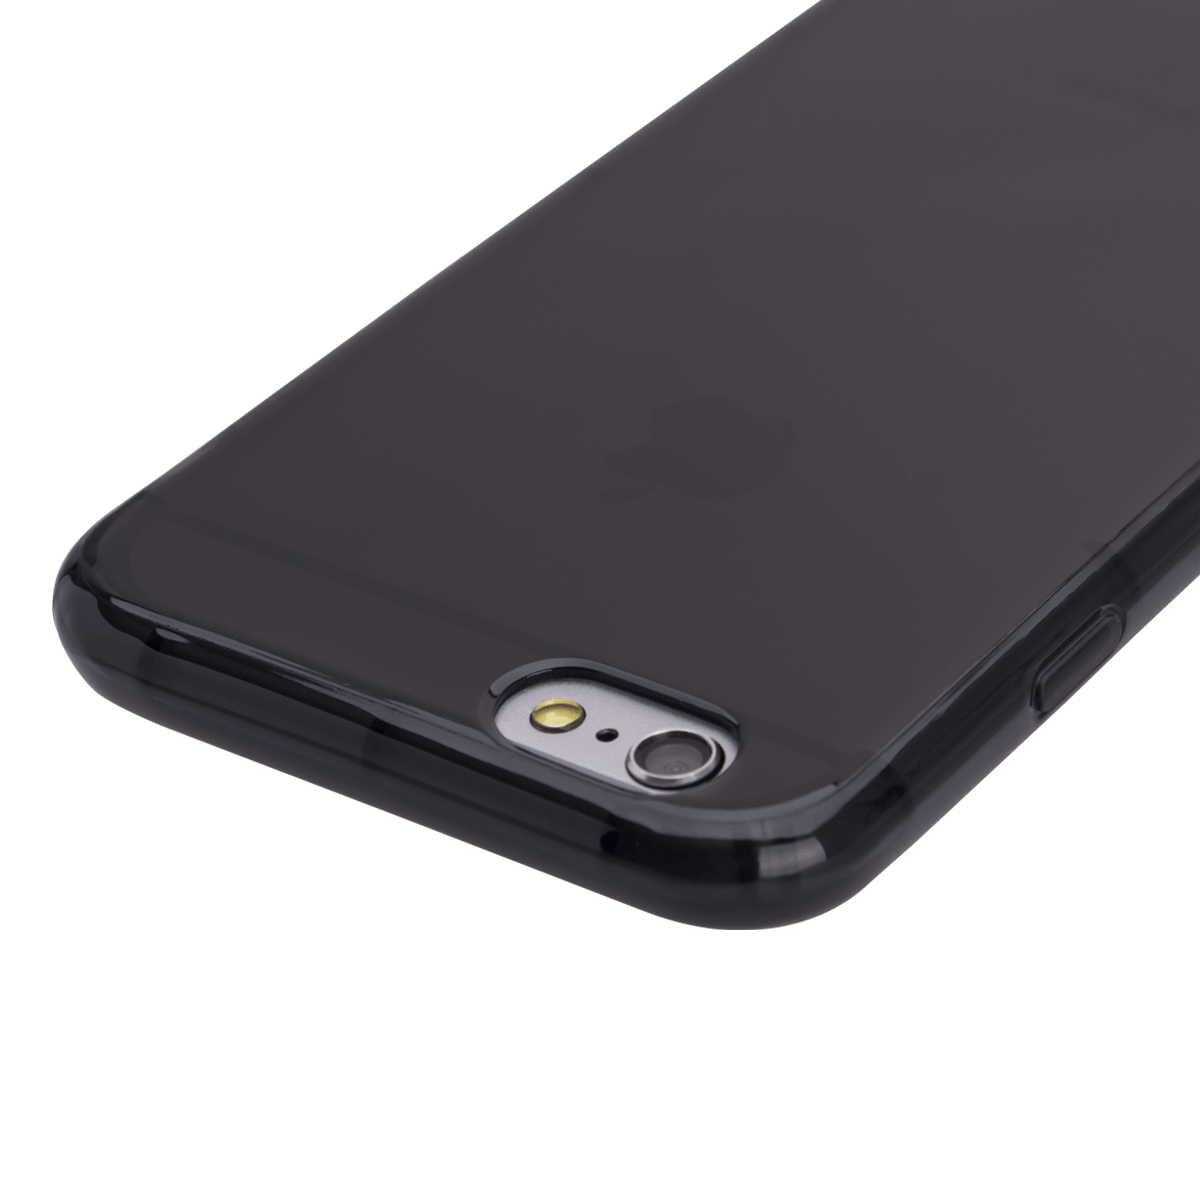 iPhone 6/6S Plus için spada Airbag Parlak Siyah TPU kapak